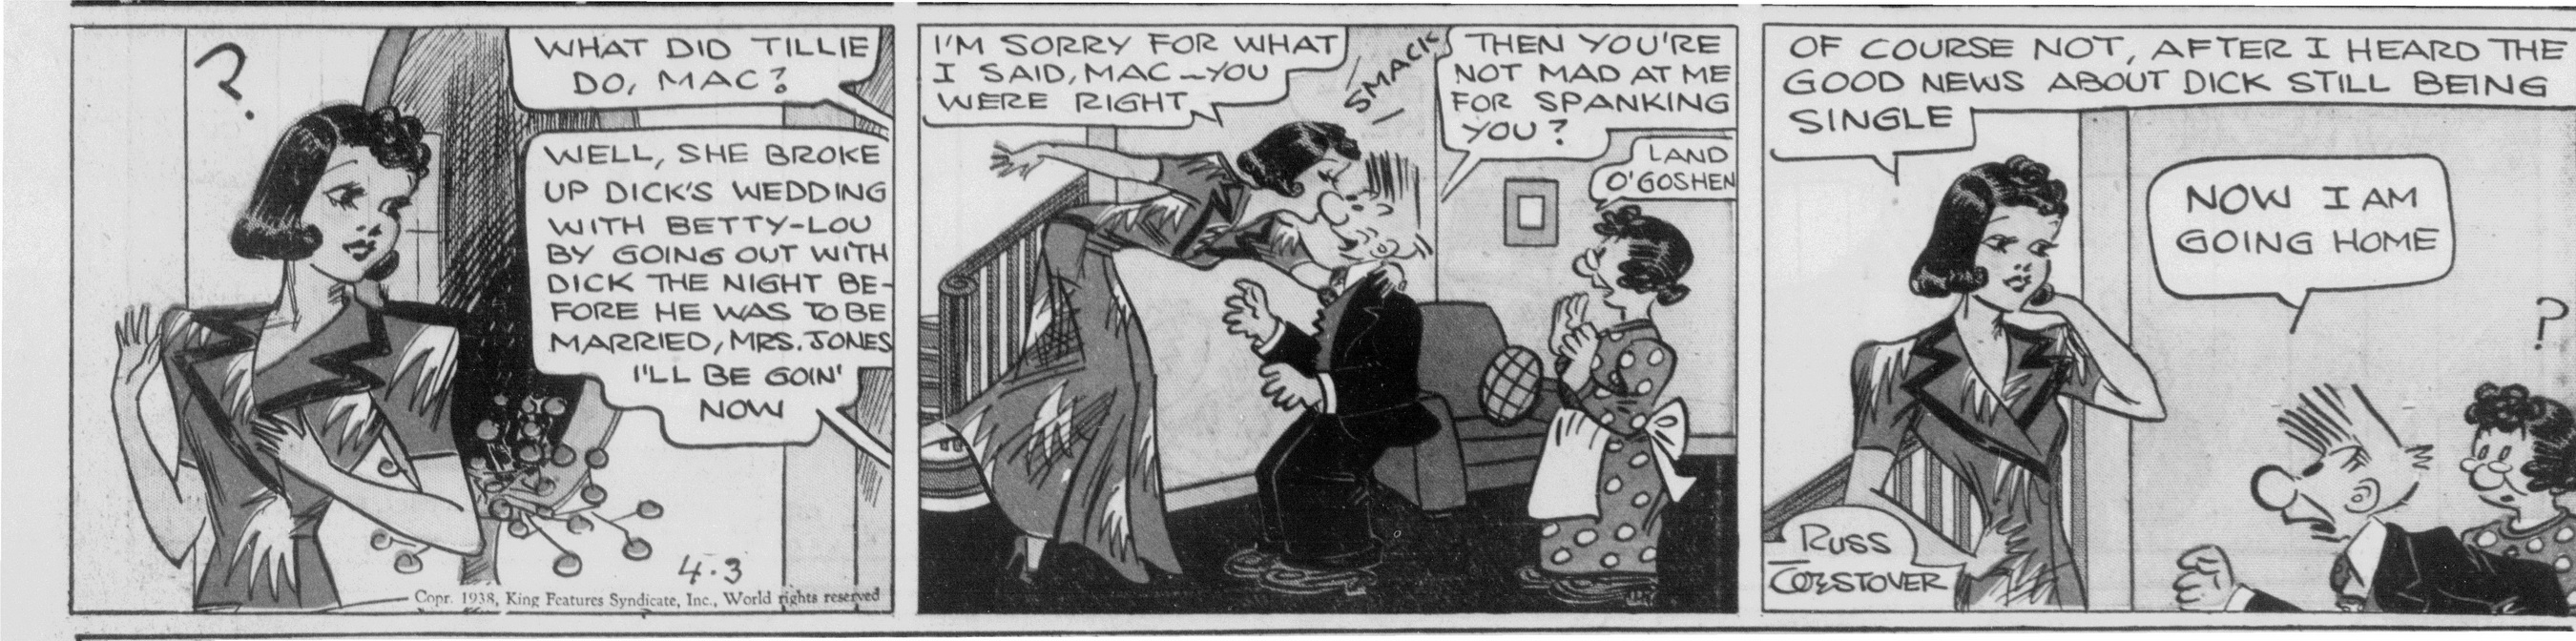 tillie the toiler gets spanked in the april 2, 1938 strip